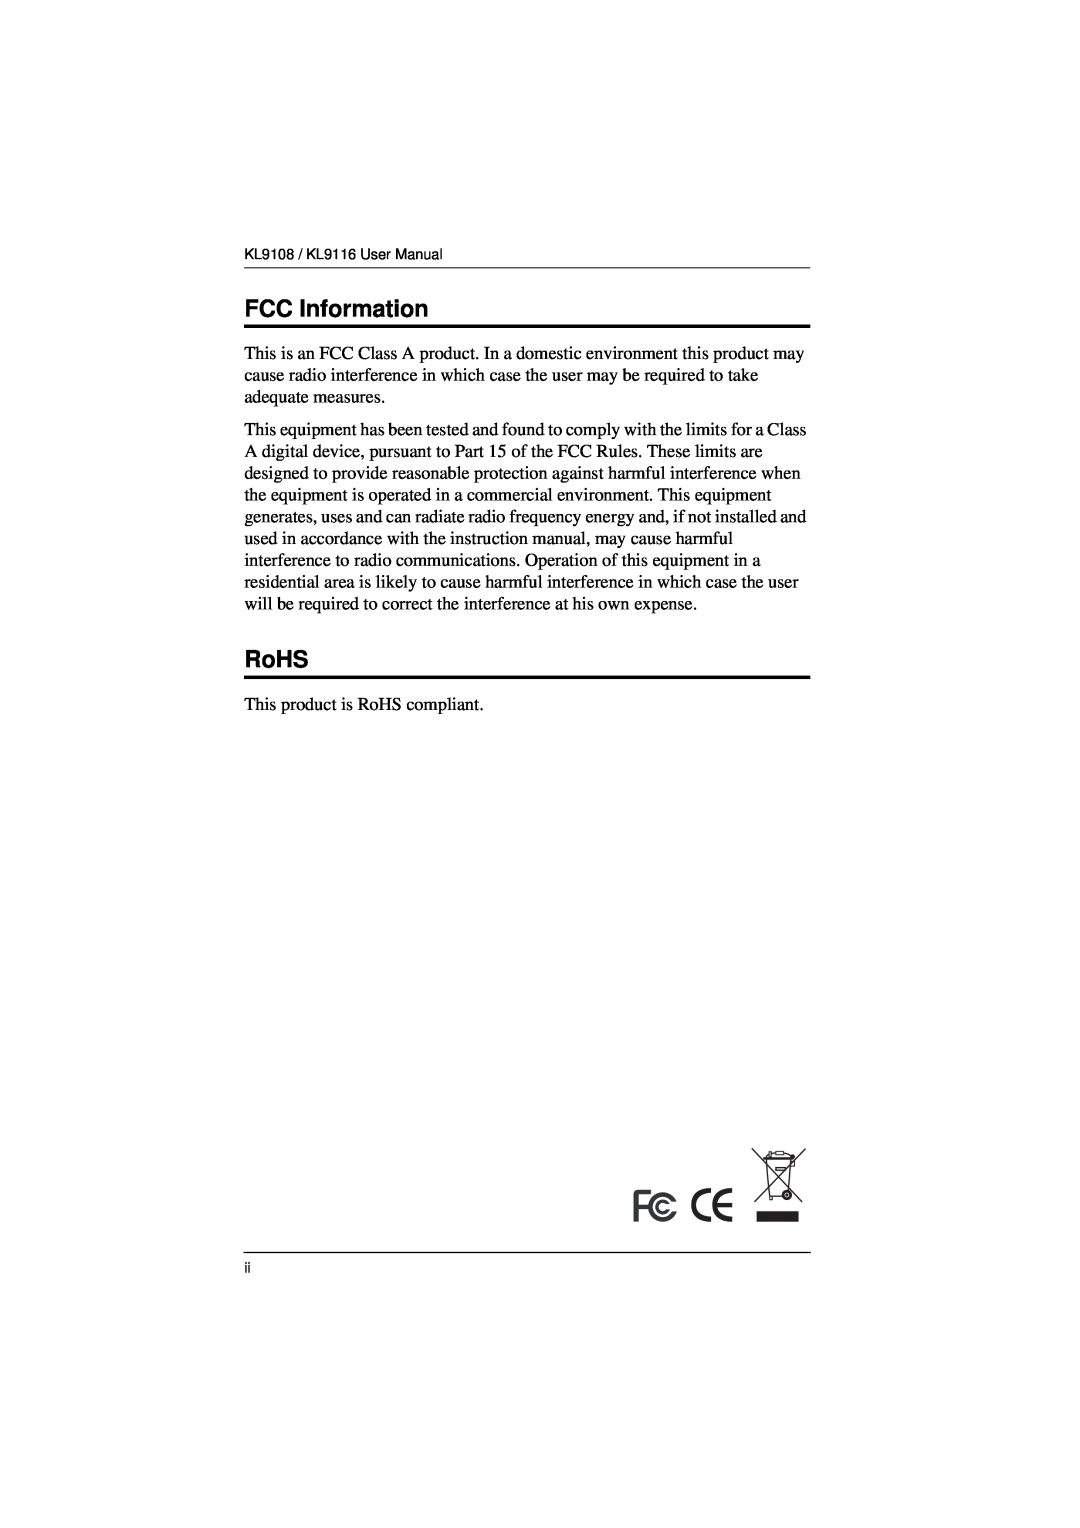 ATEN Technology KL9108, KL9116 user manual FCC Information, RoHS 